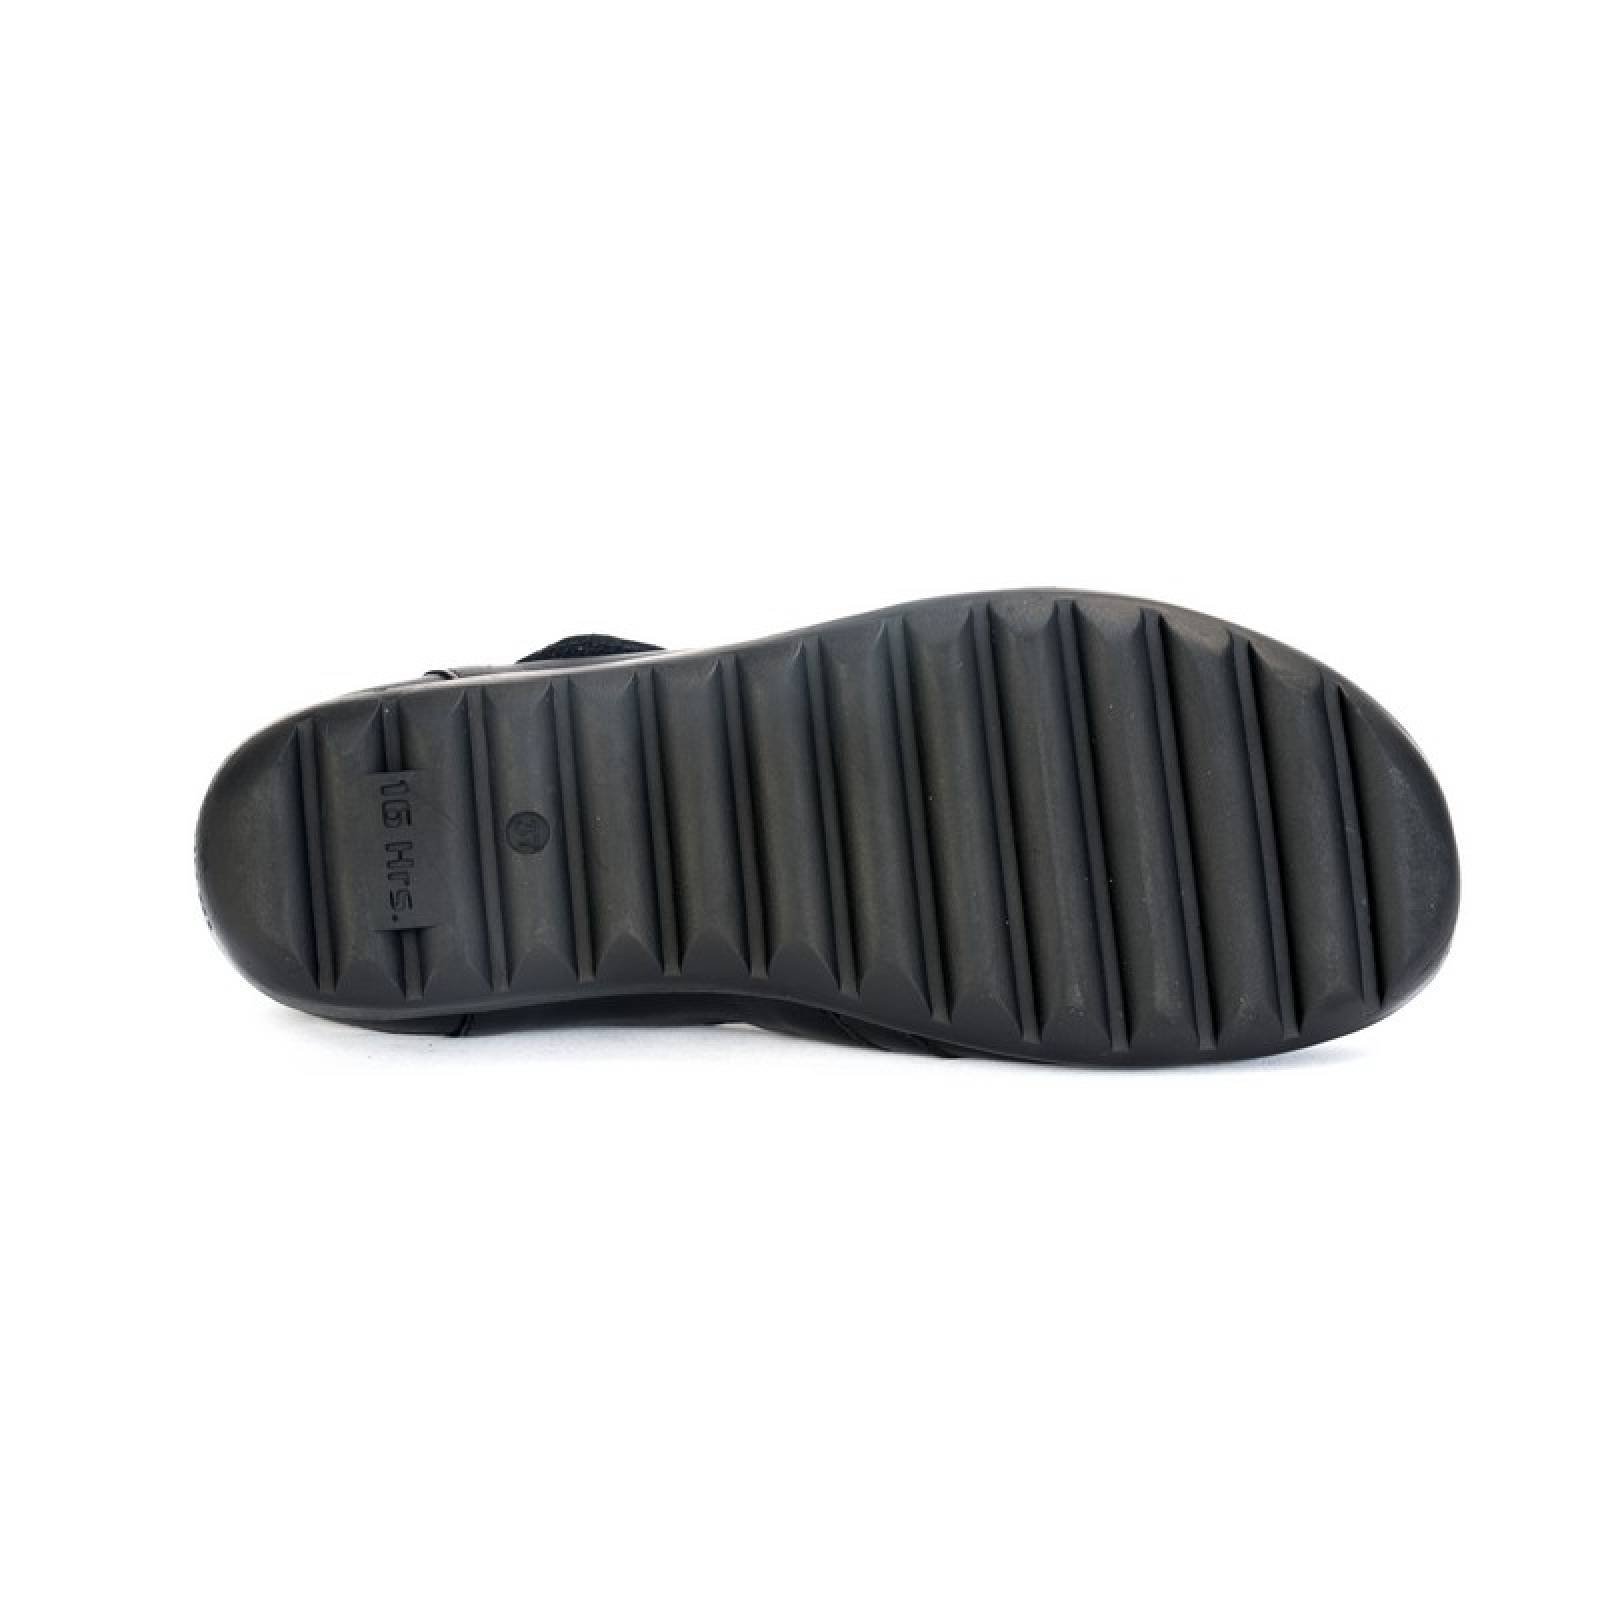 Jarking - Sandalia Casual Negra con Velcro Detalle Tejido y Perforado para Dama